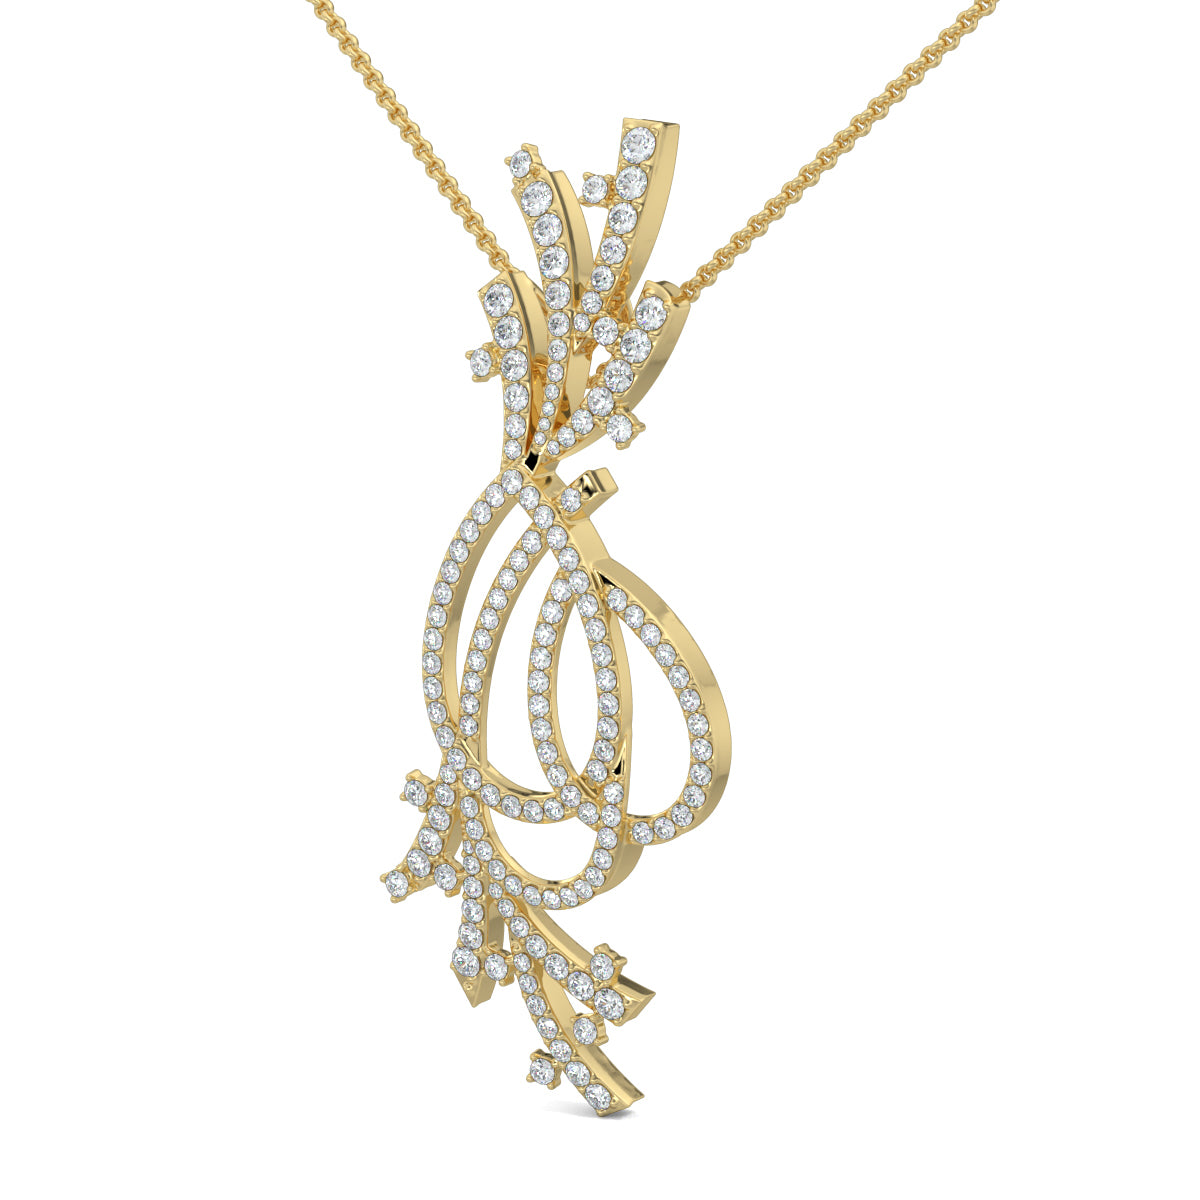 Yellow Gold, Diamond Pendant, Natural diamond pendant, Labgrown diamond pendant, Italian design diamond pendant, Casual diamond pendant, Floral-inspired pendant